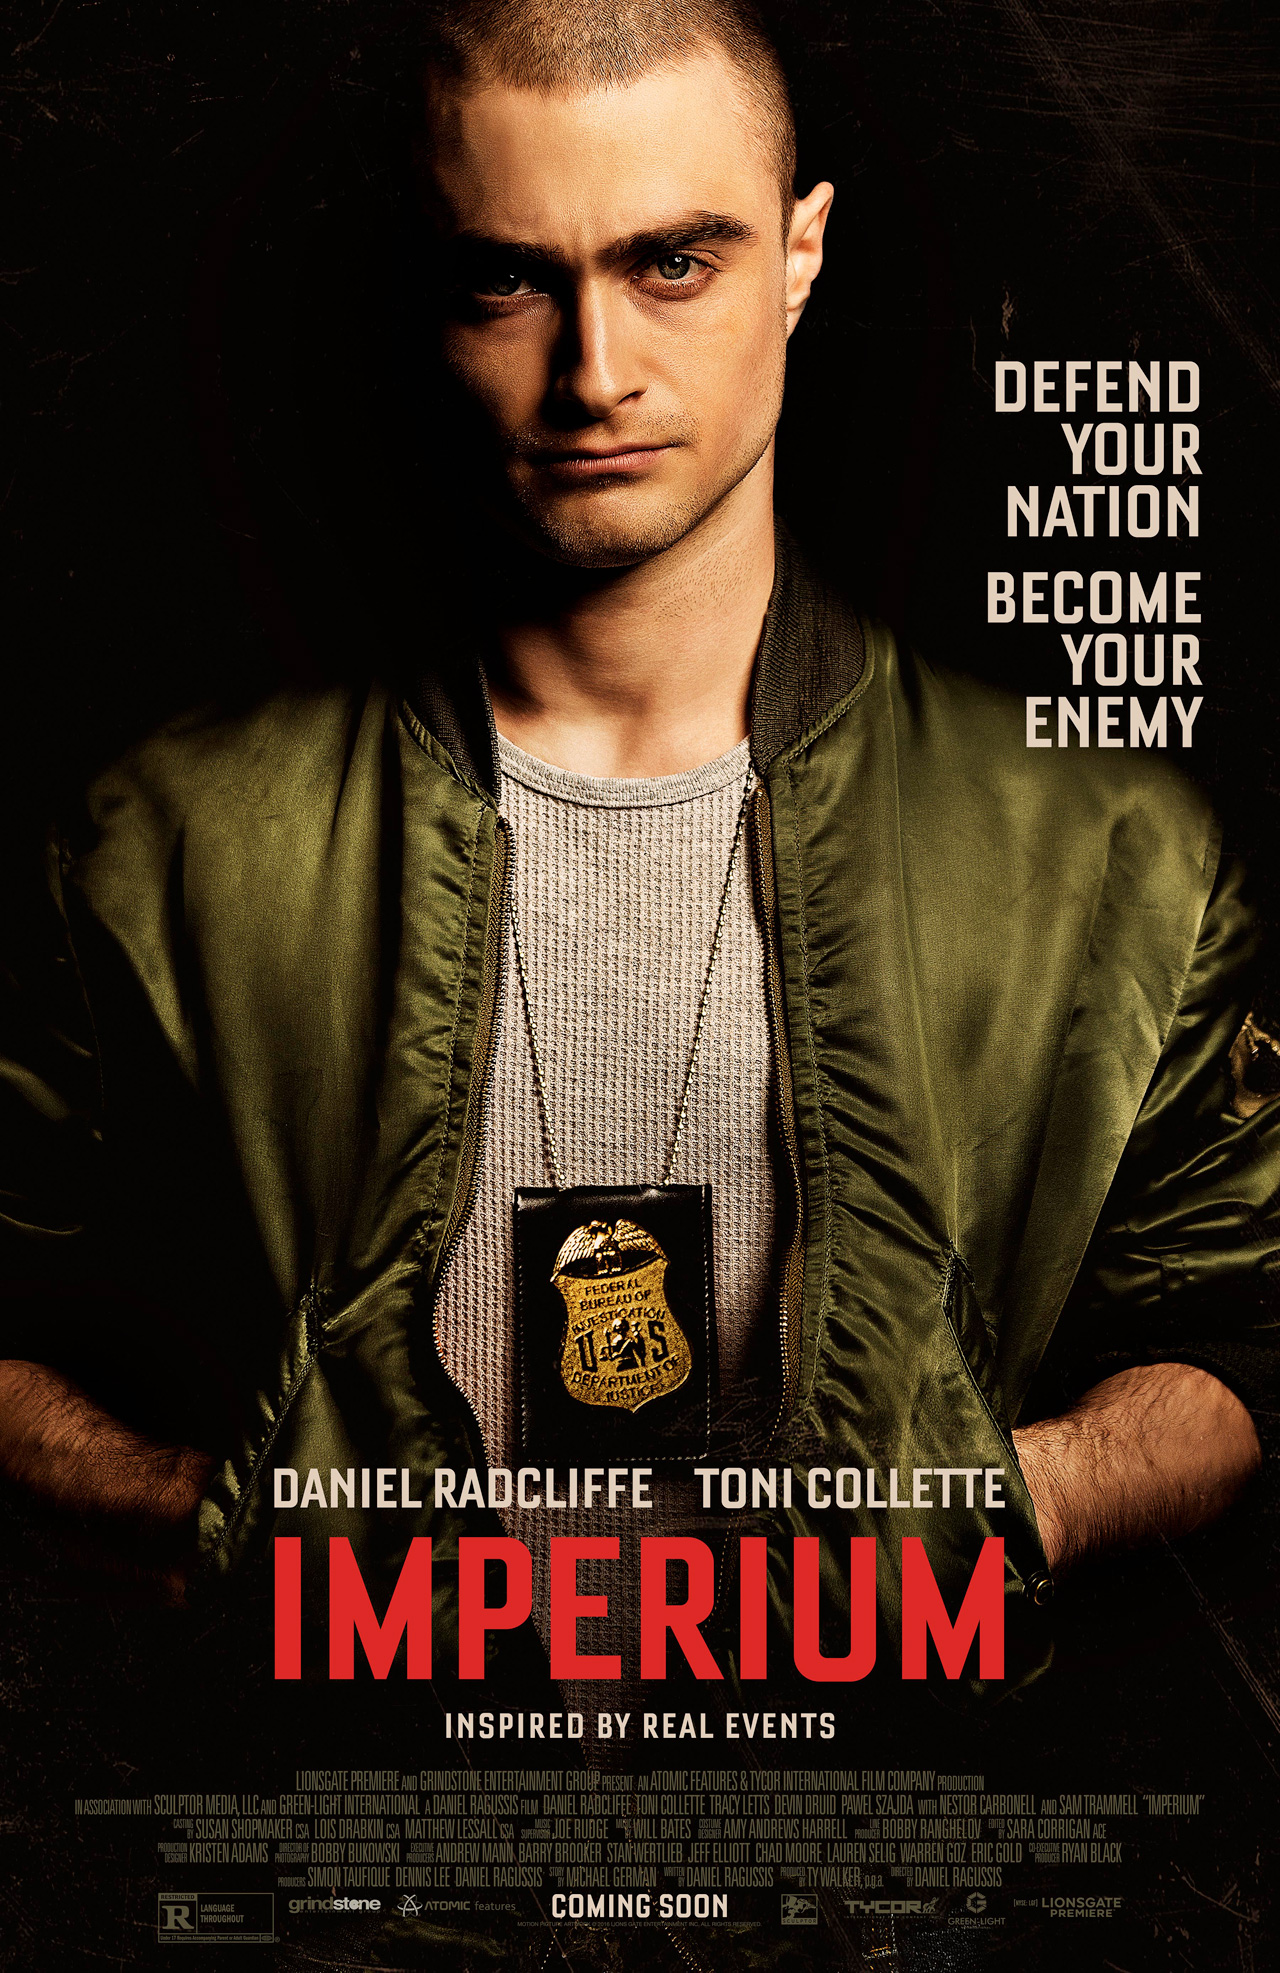 Imperium: daniel radcliffe’s latest movie has a trailer